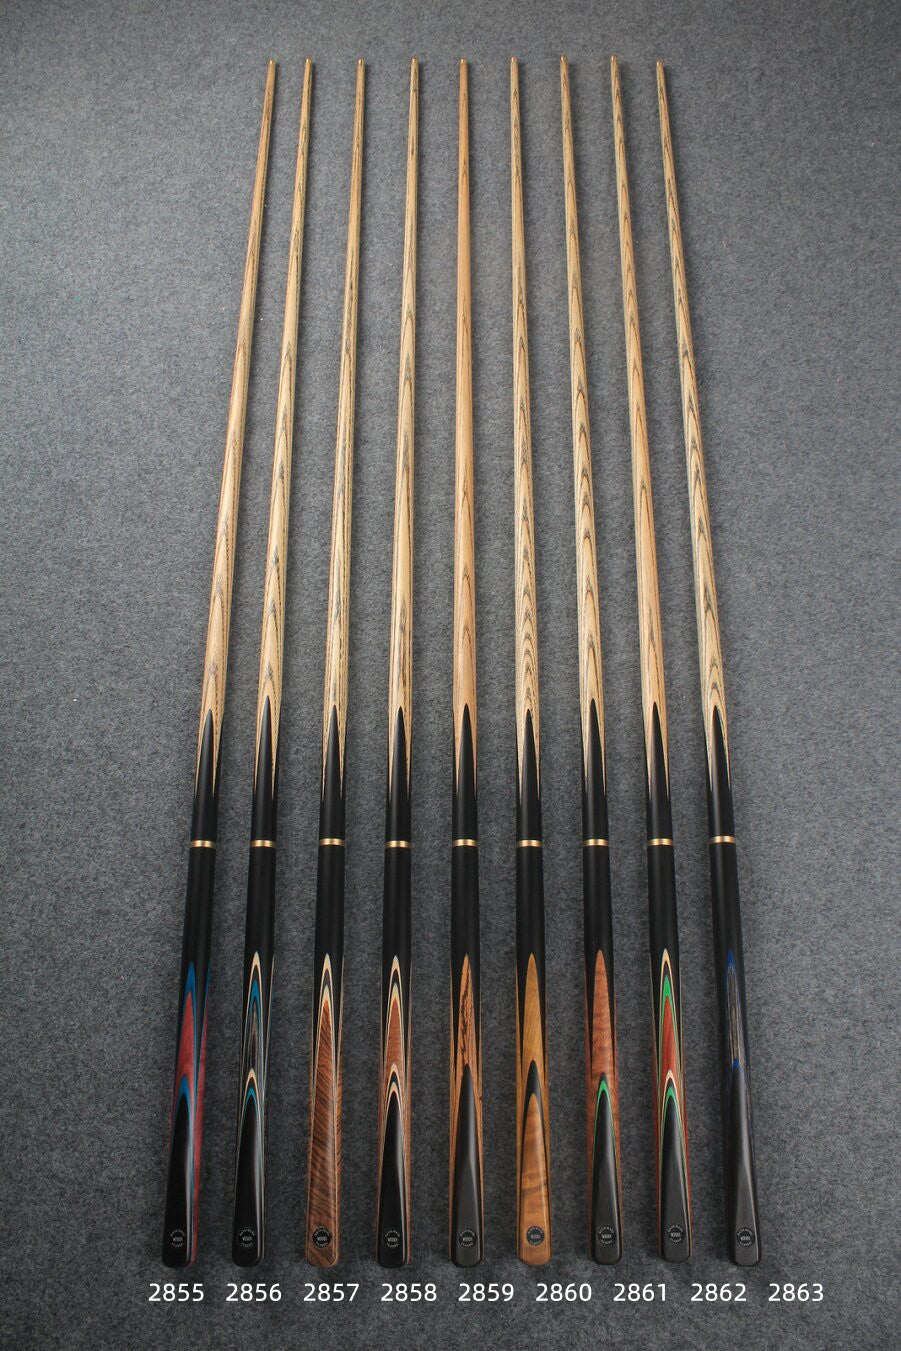 3/4 handmade ash 58" snooker / pool cue #2855-2863